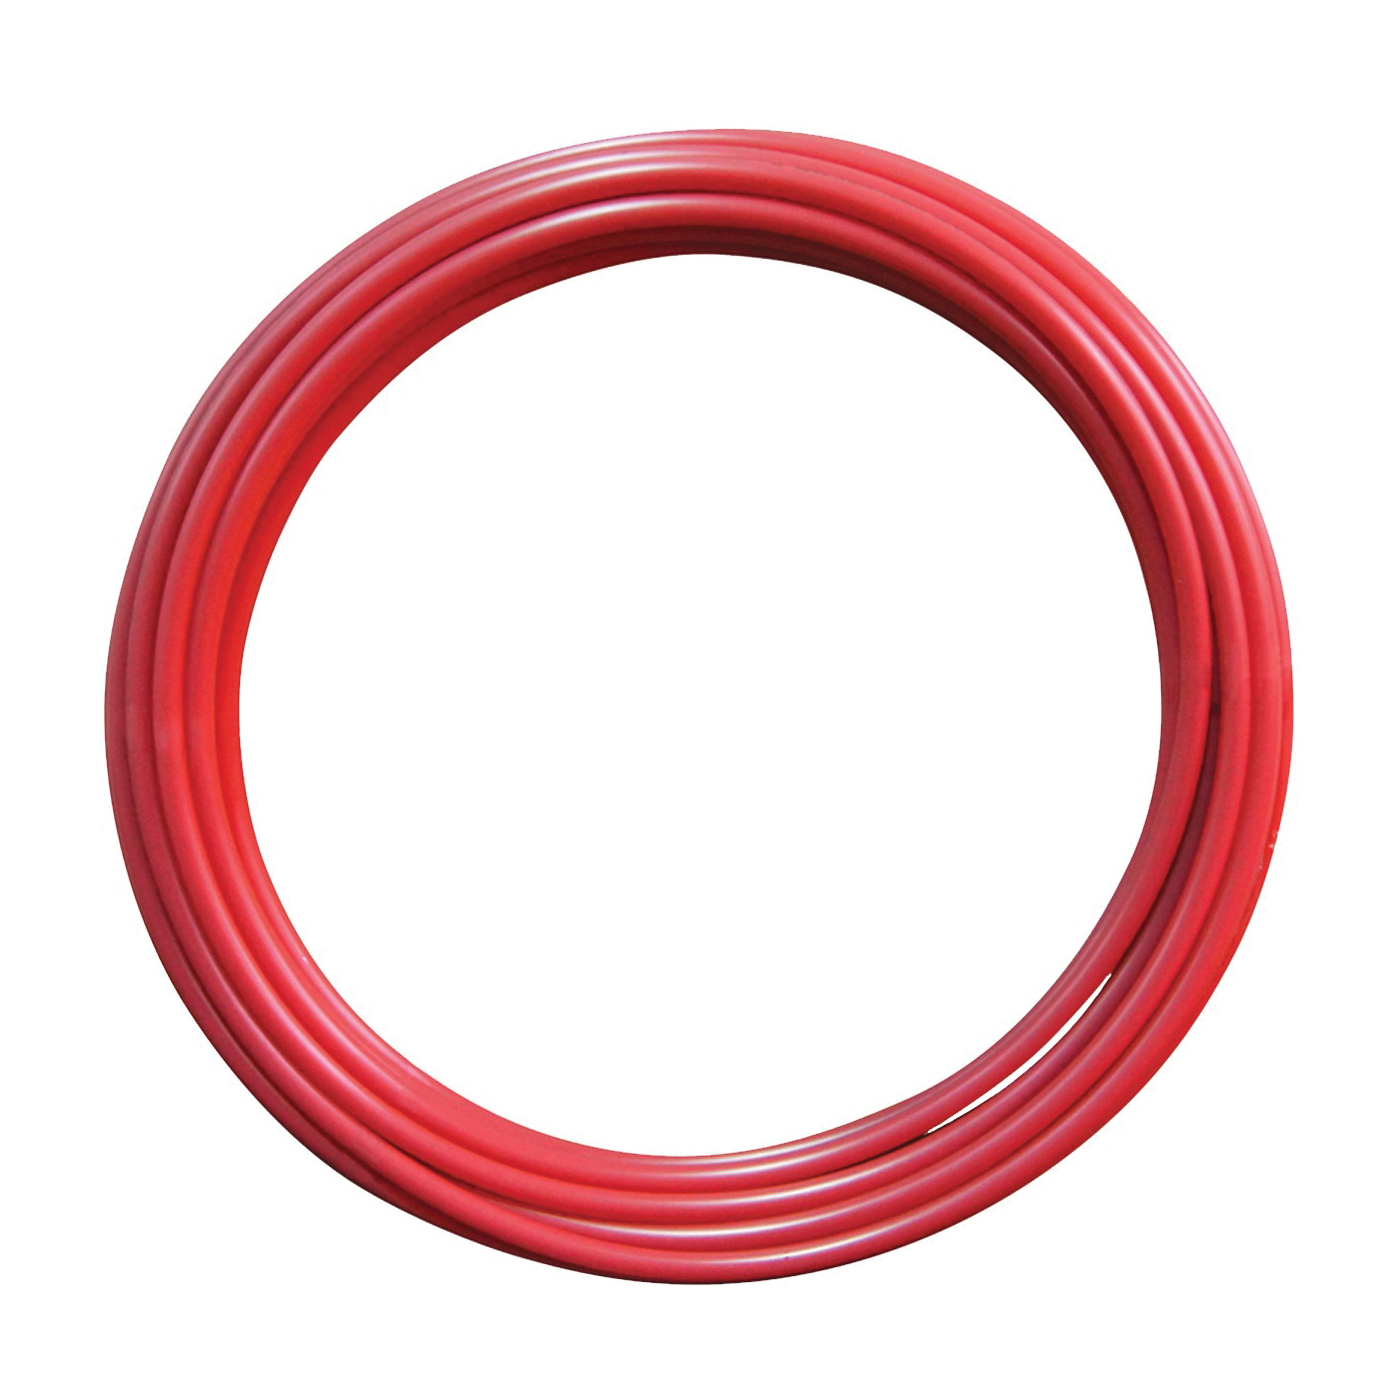 APPR10012 PEX-B Pipe Tubing, 1/2 in, Red, 100 ft L